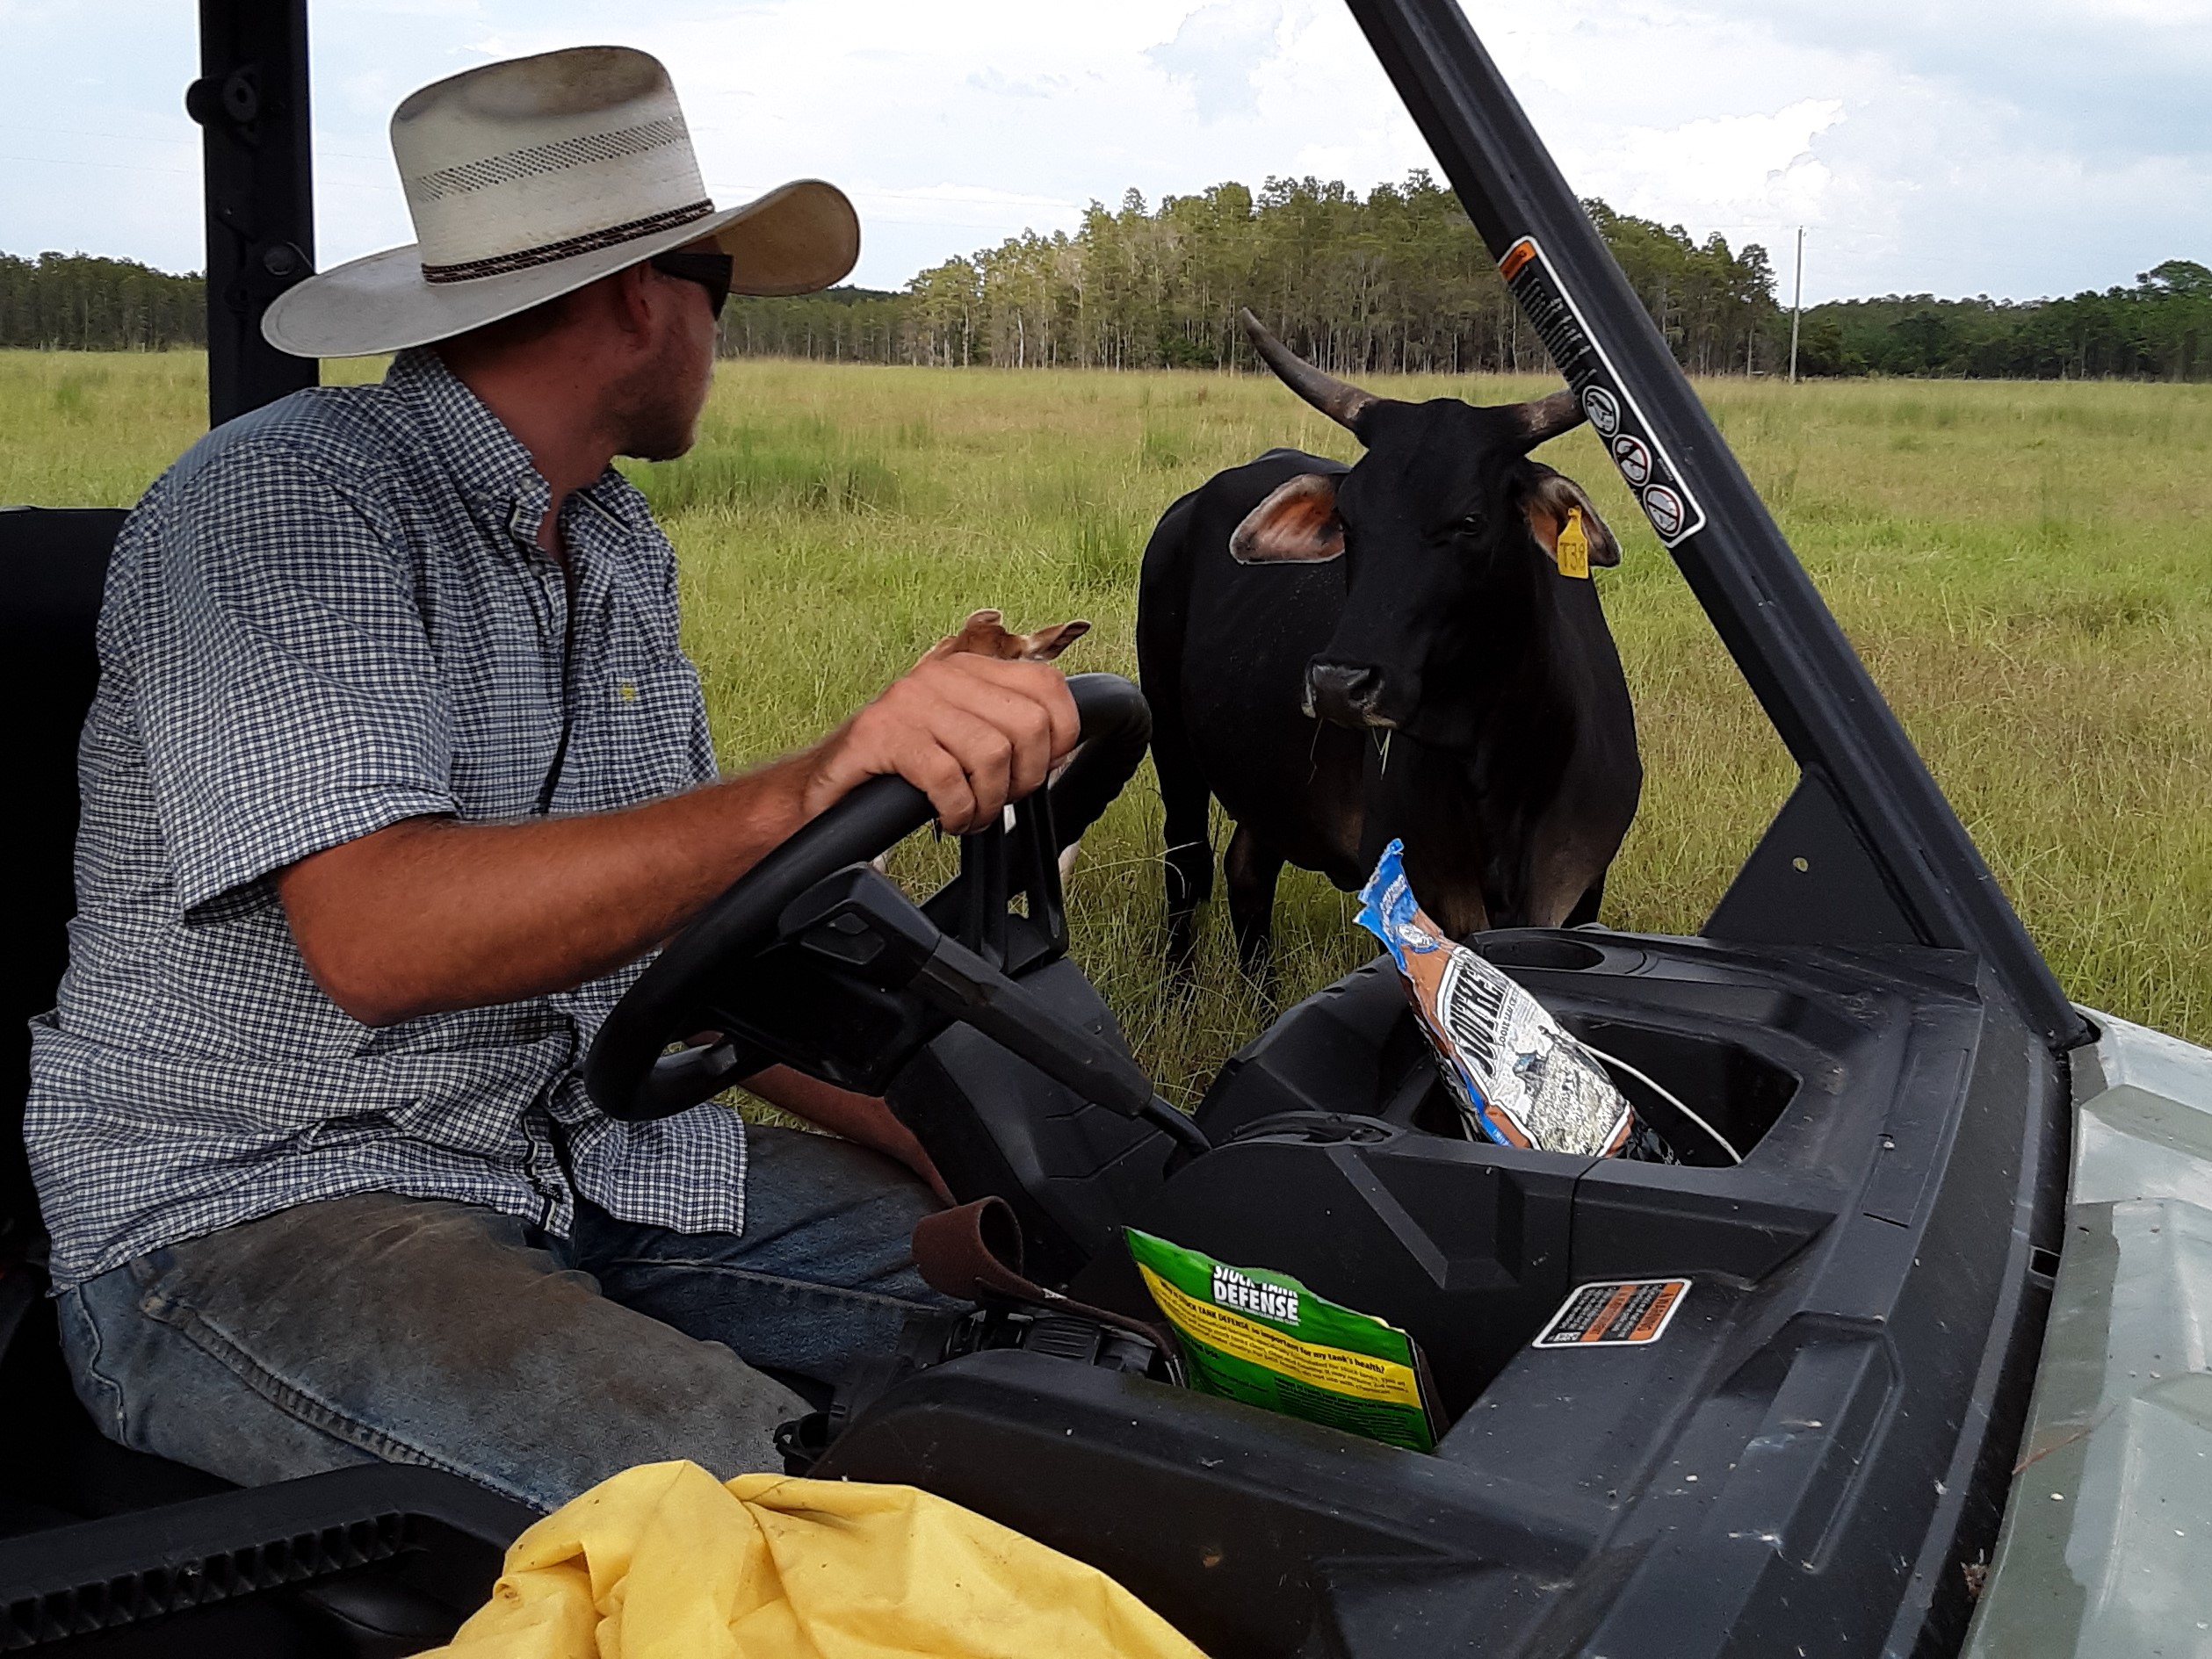 A man sitting in a farm vehicle near a cow in a field